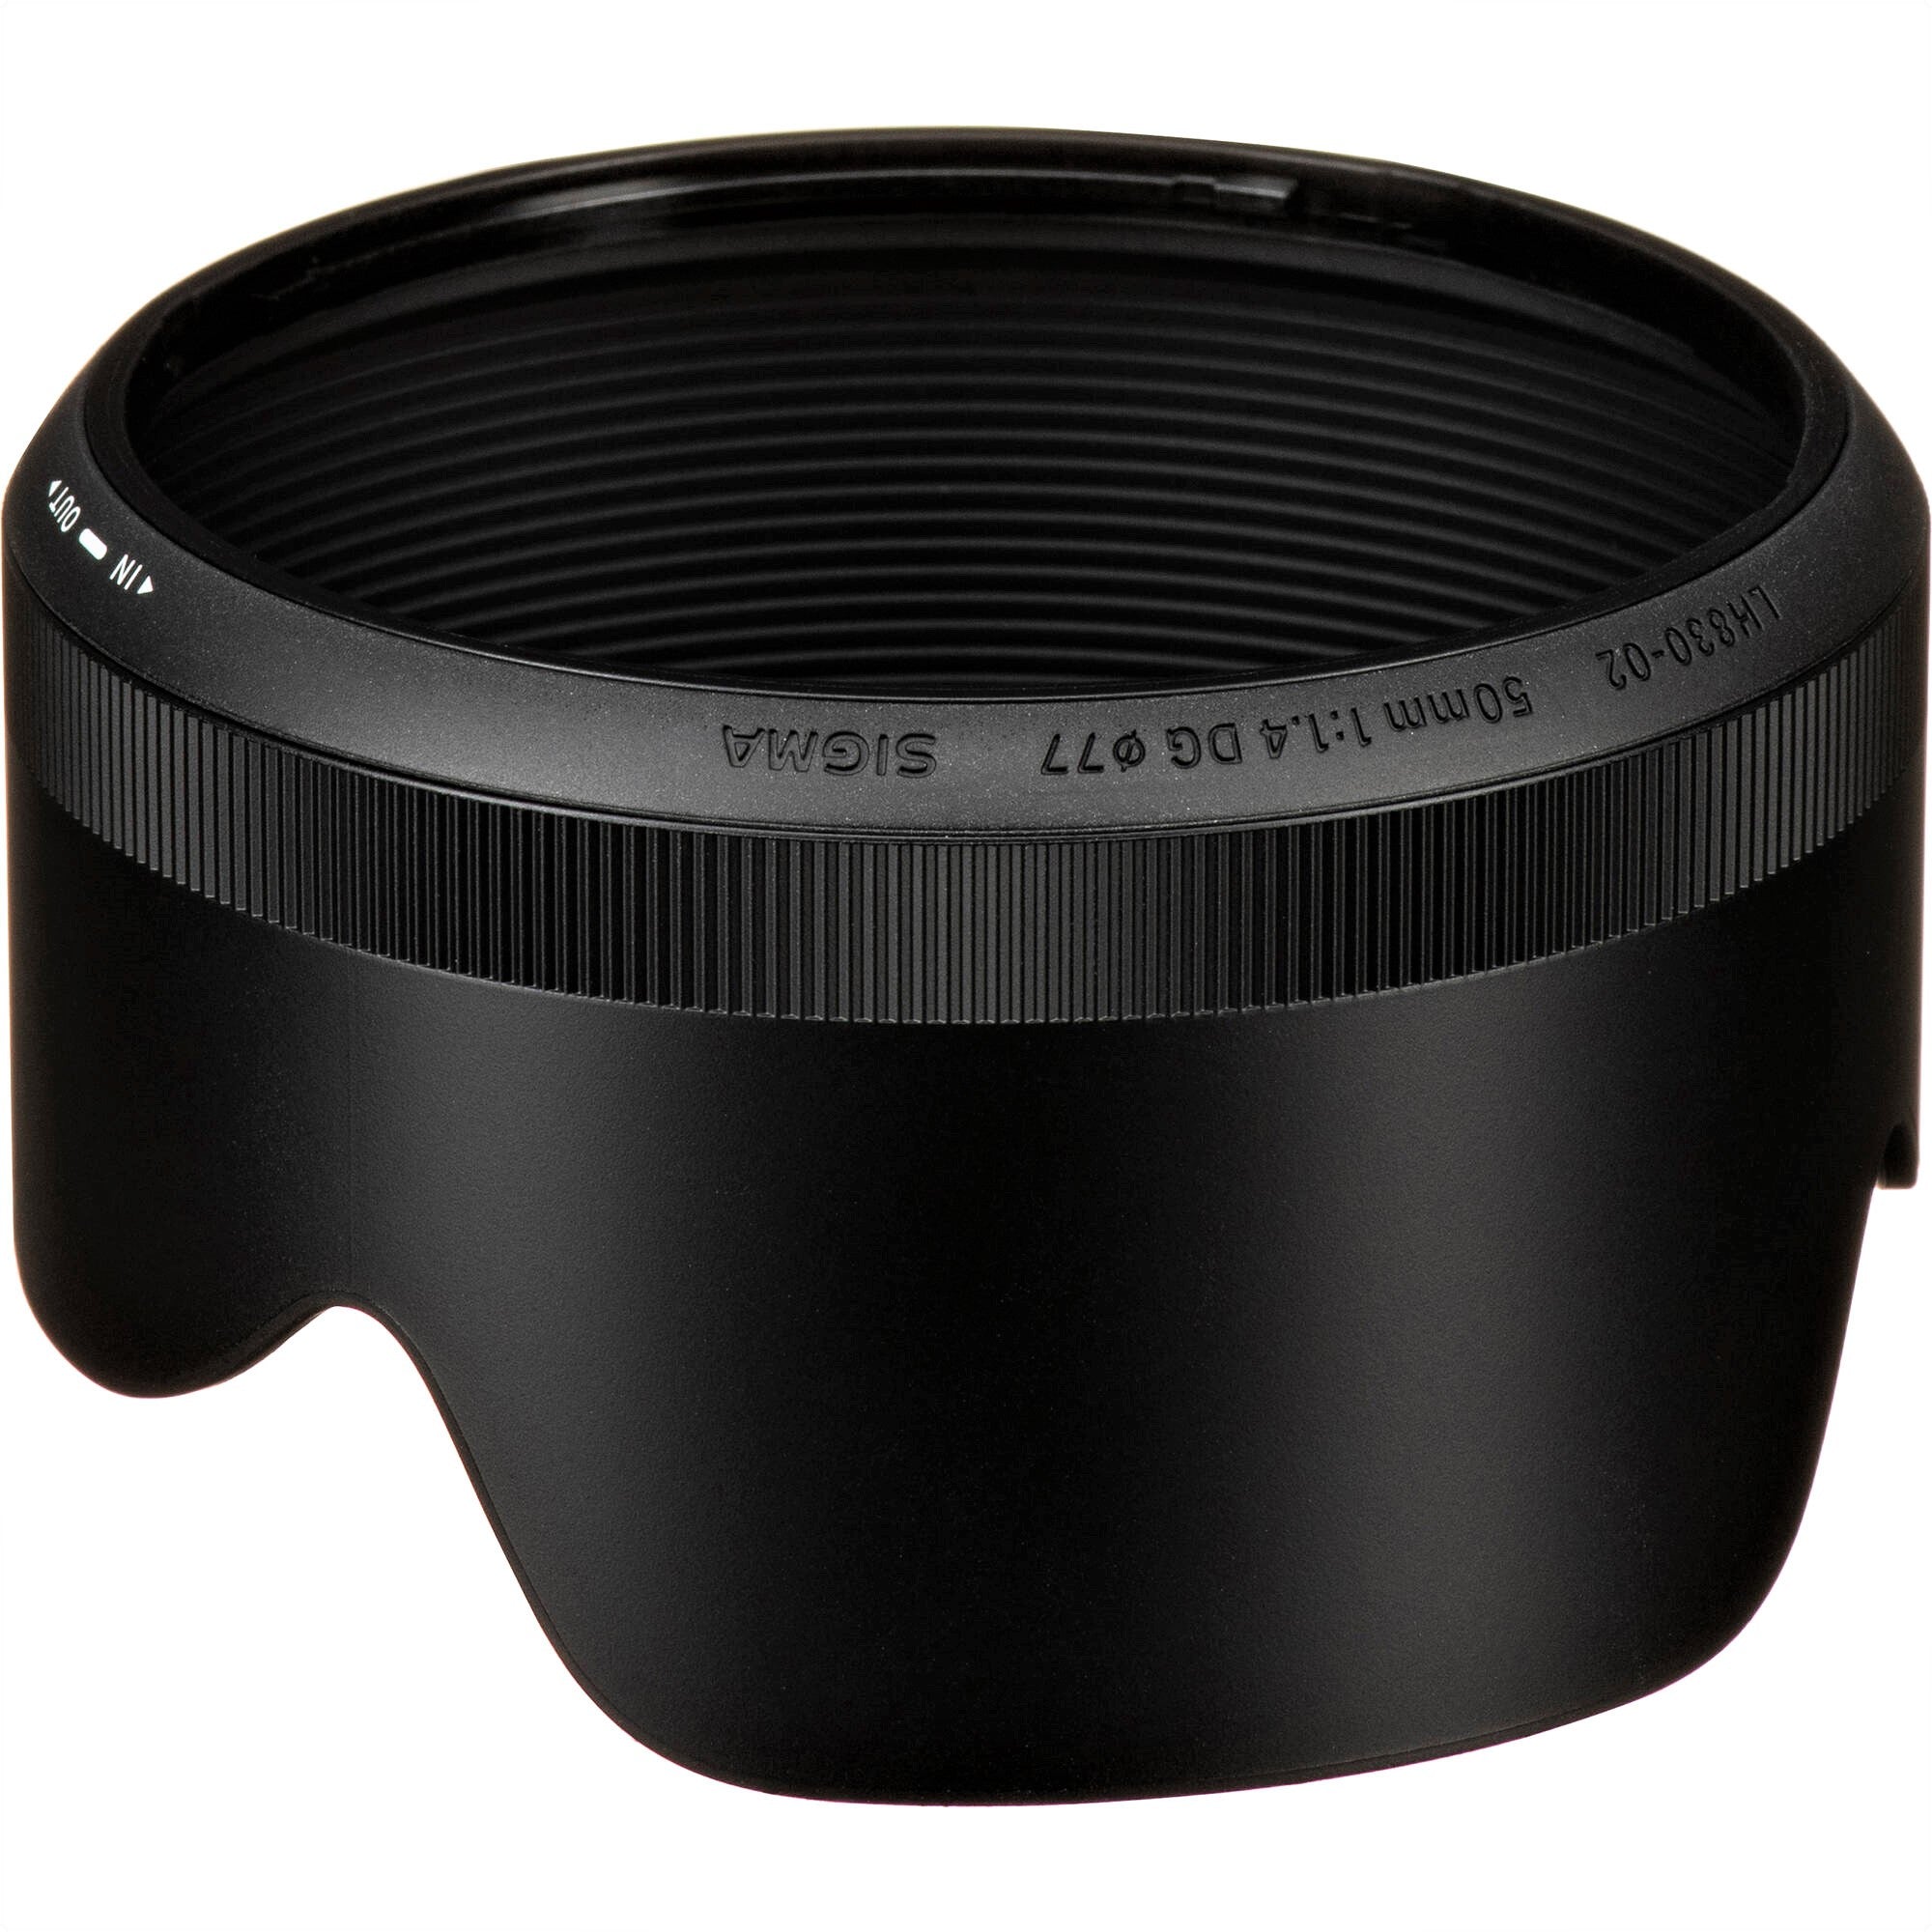 Sigma 50mm F1.4 DG HSM Art Lens for Canon EF